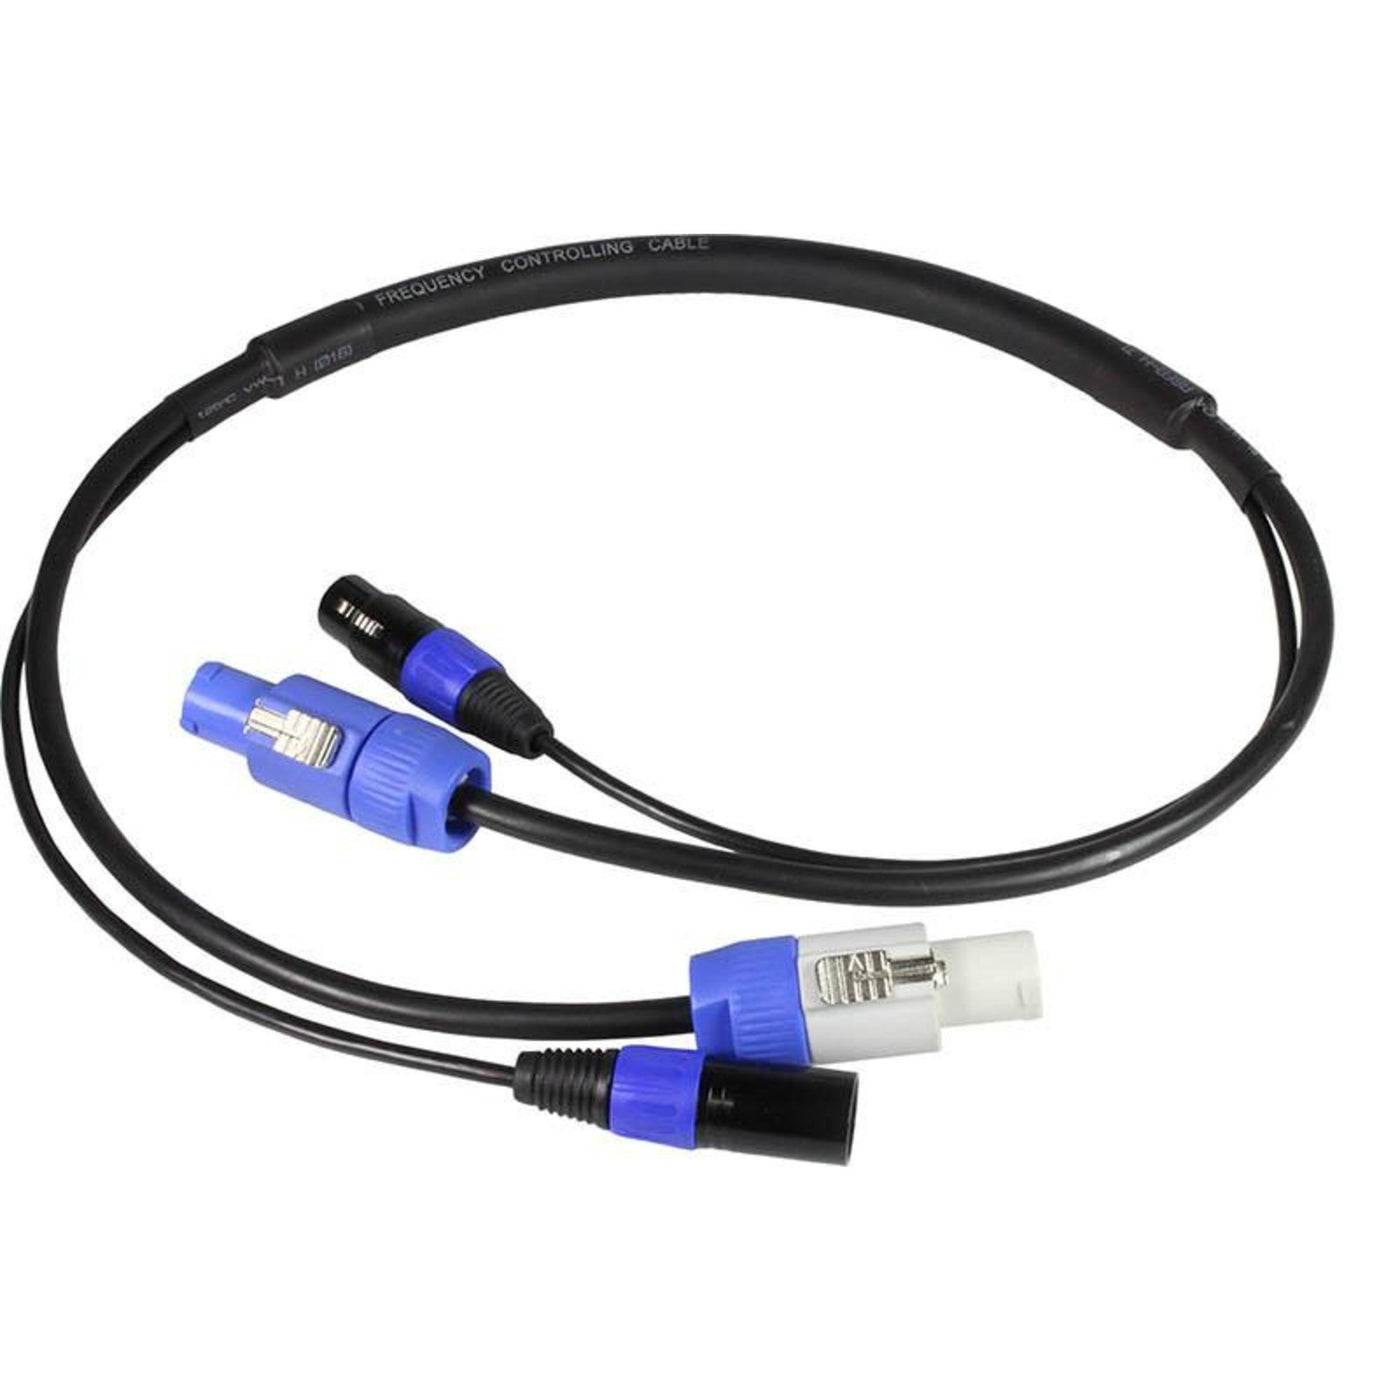 Blizzard Cool Cable 124036 DMXPC-25 DMX 3-pin PC Combo Cable